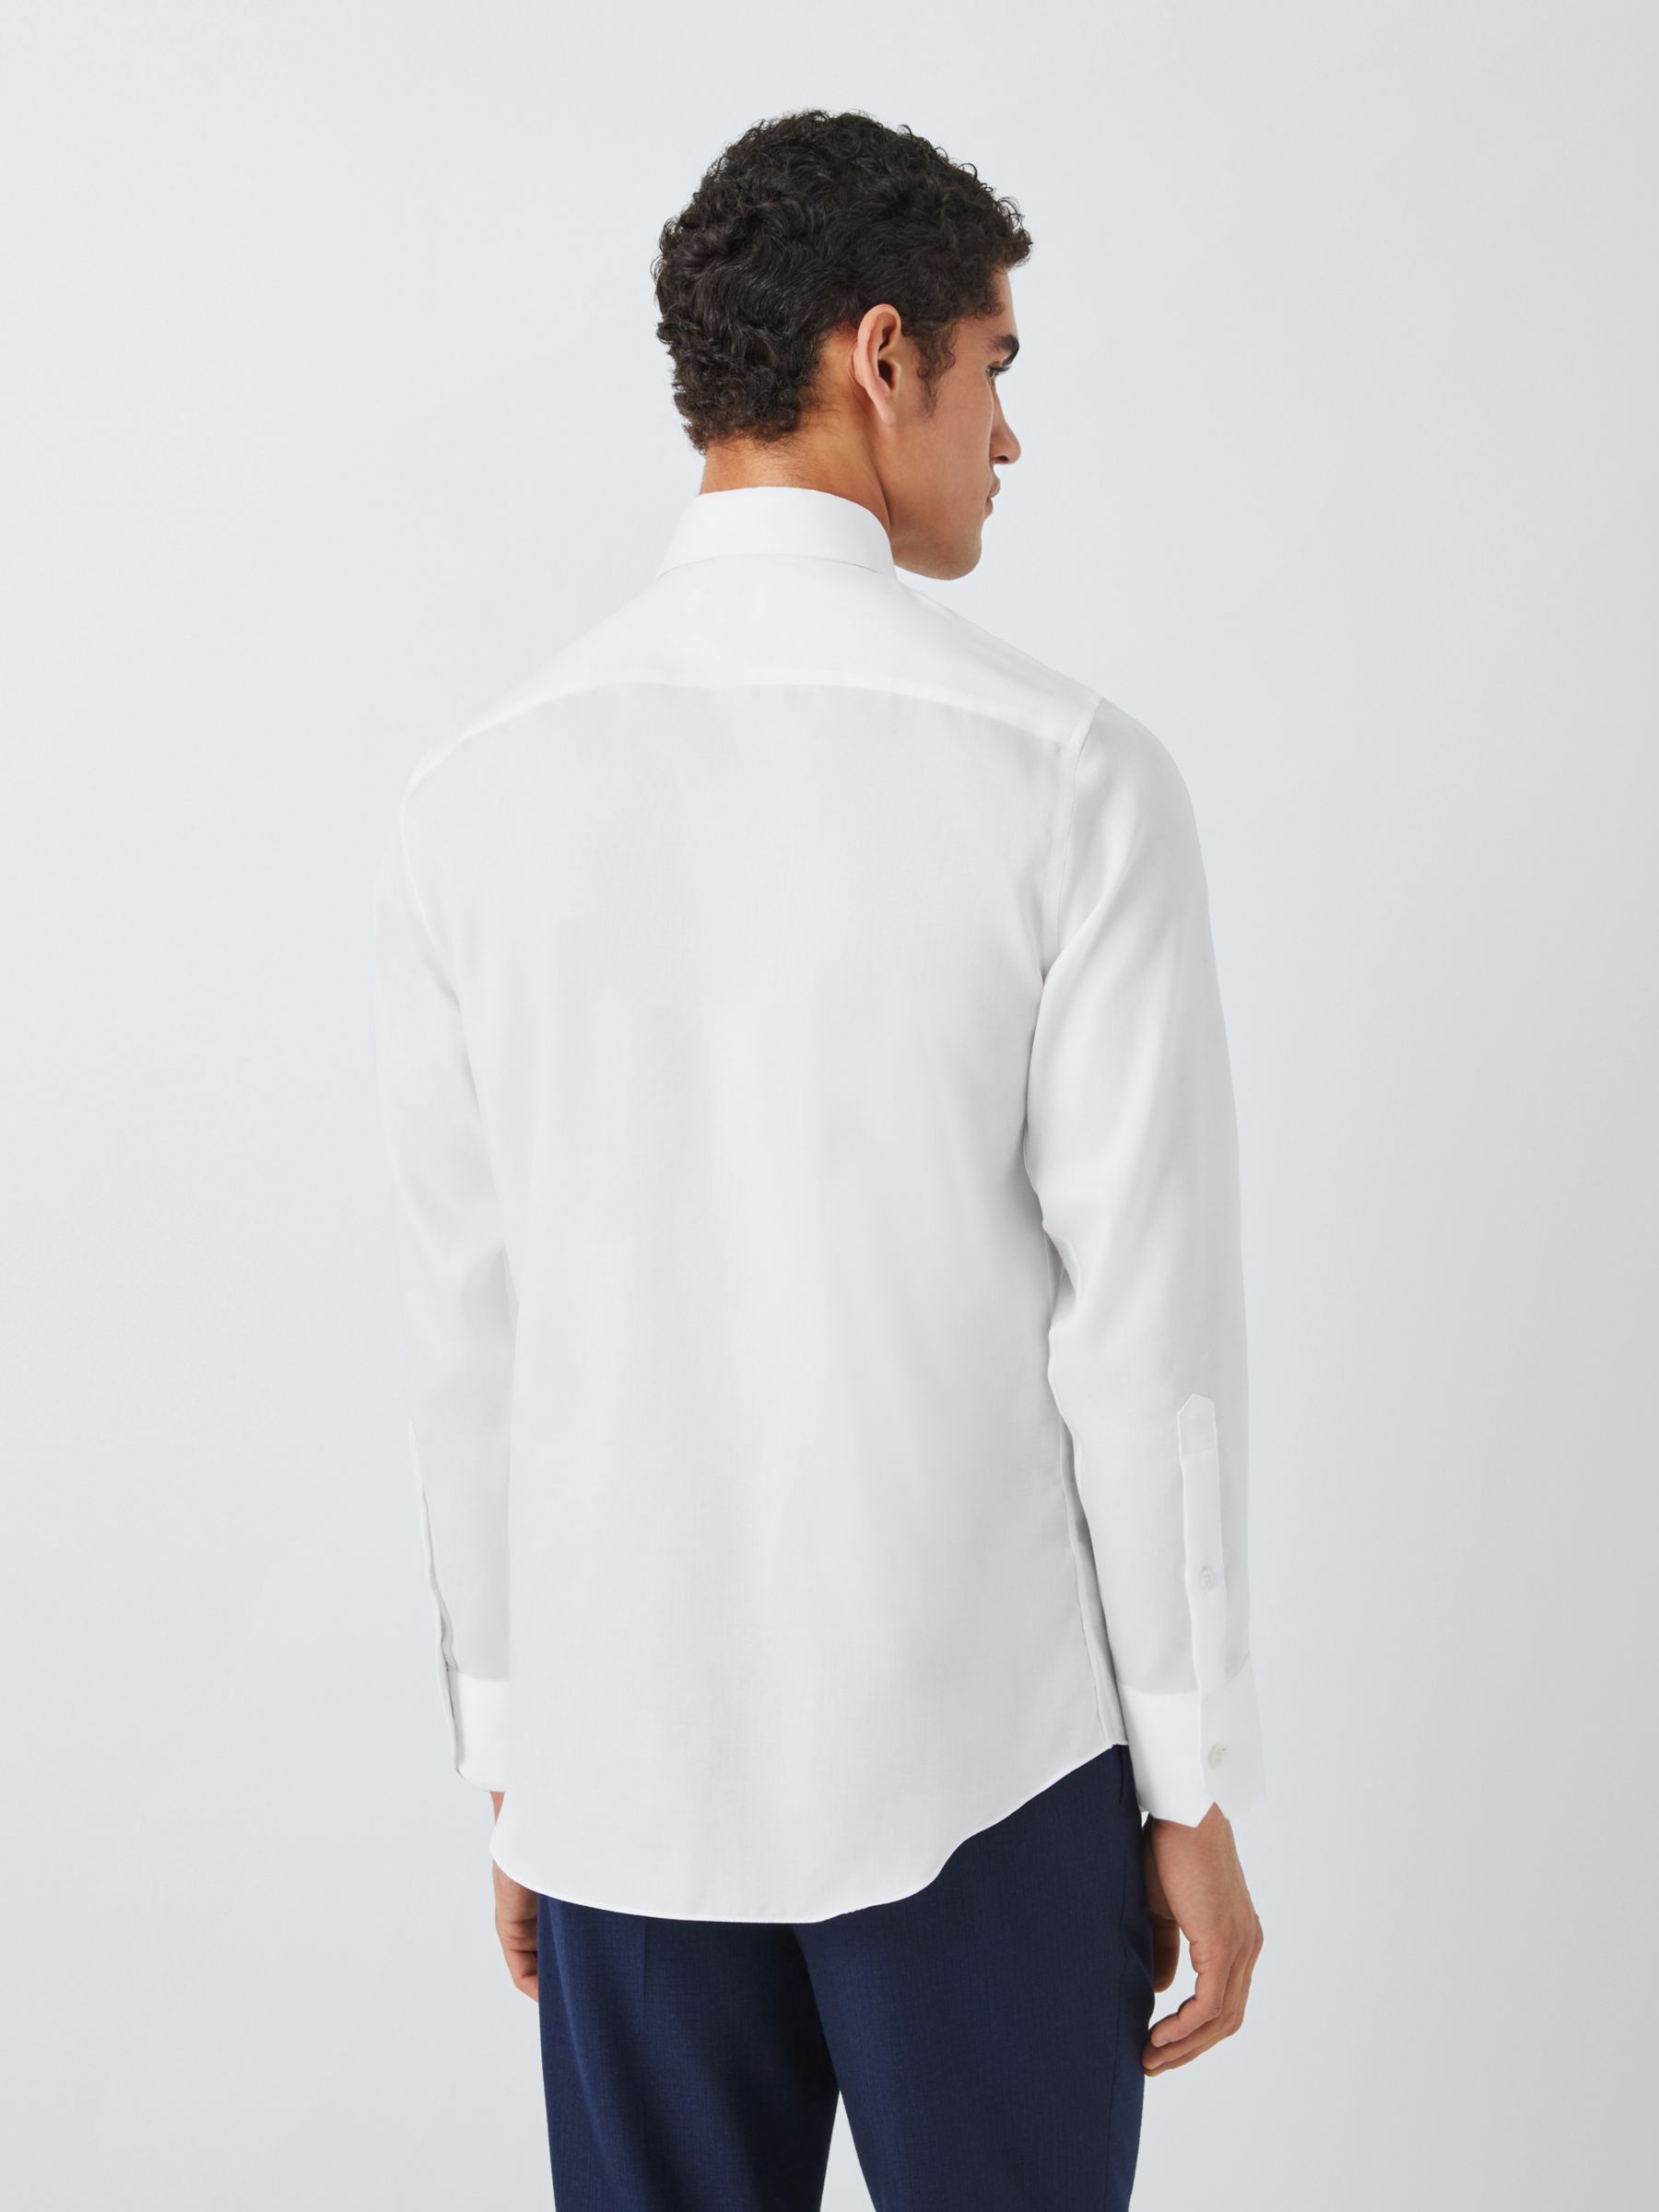 John Lewis Dobby Tailored Fit Shirt, White, 17.5R